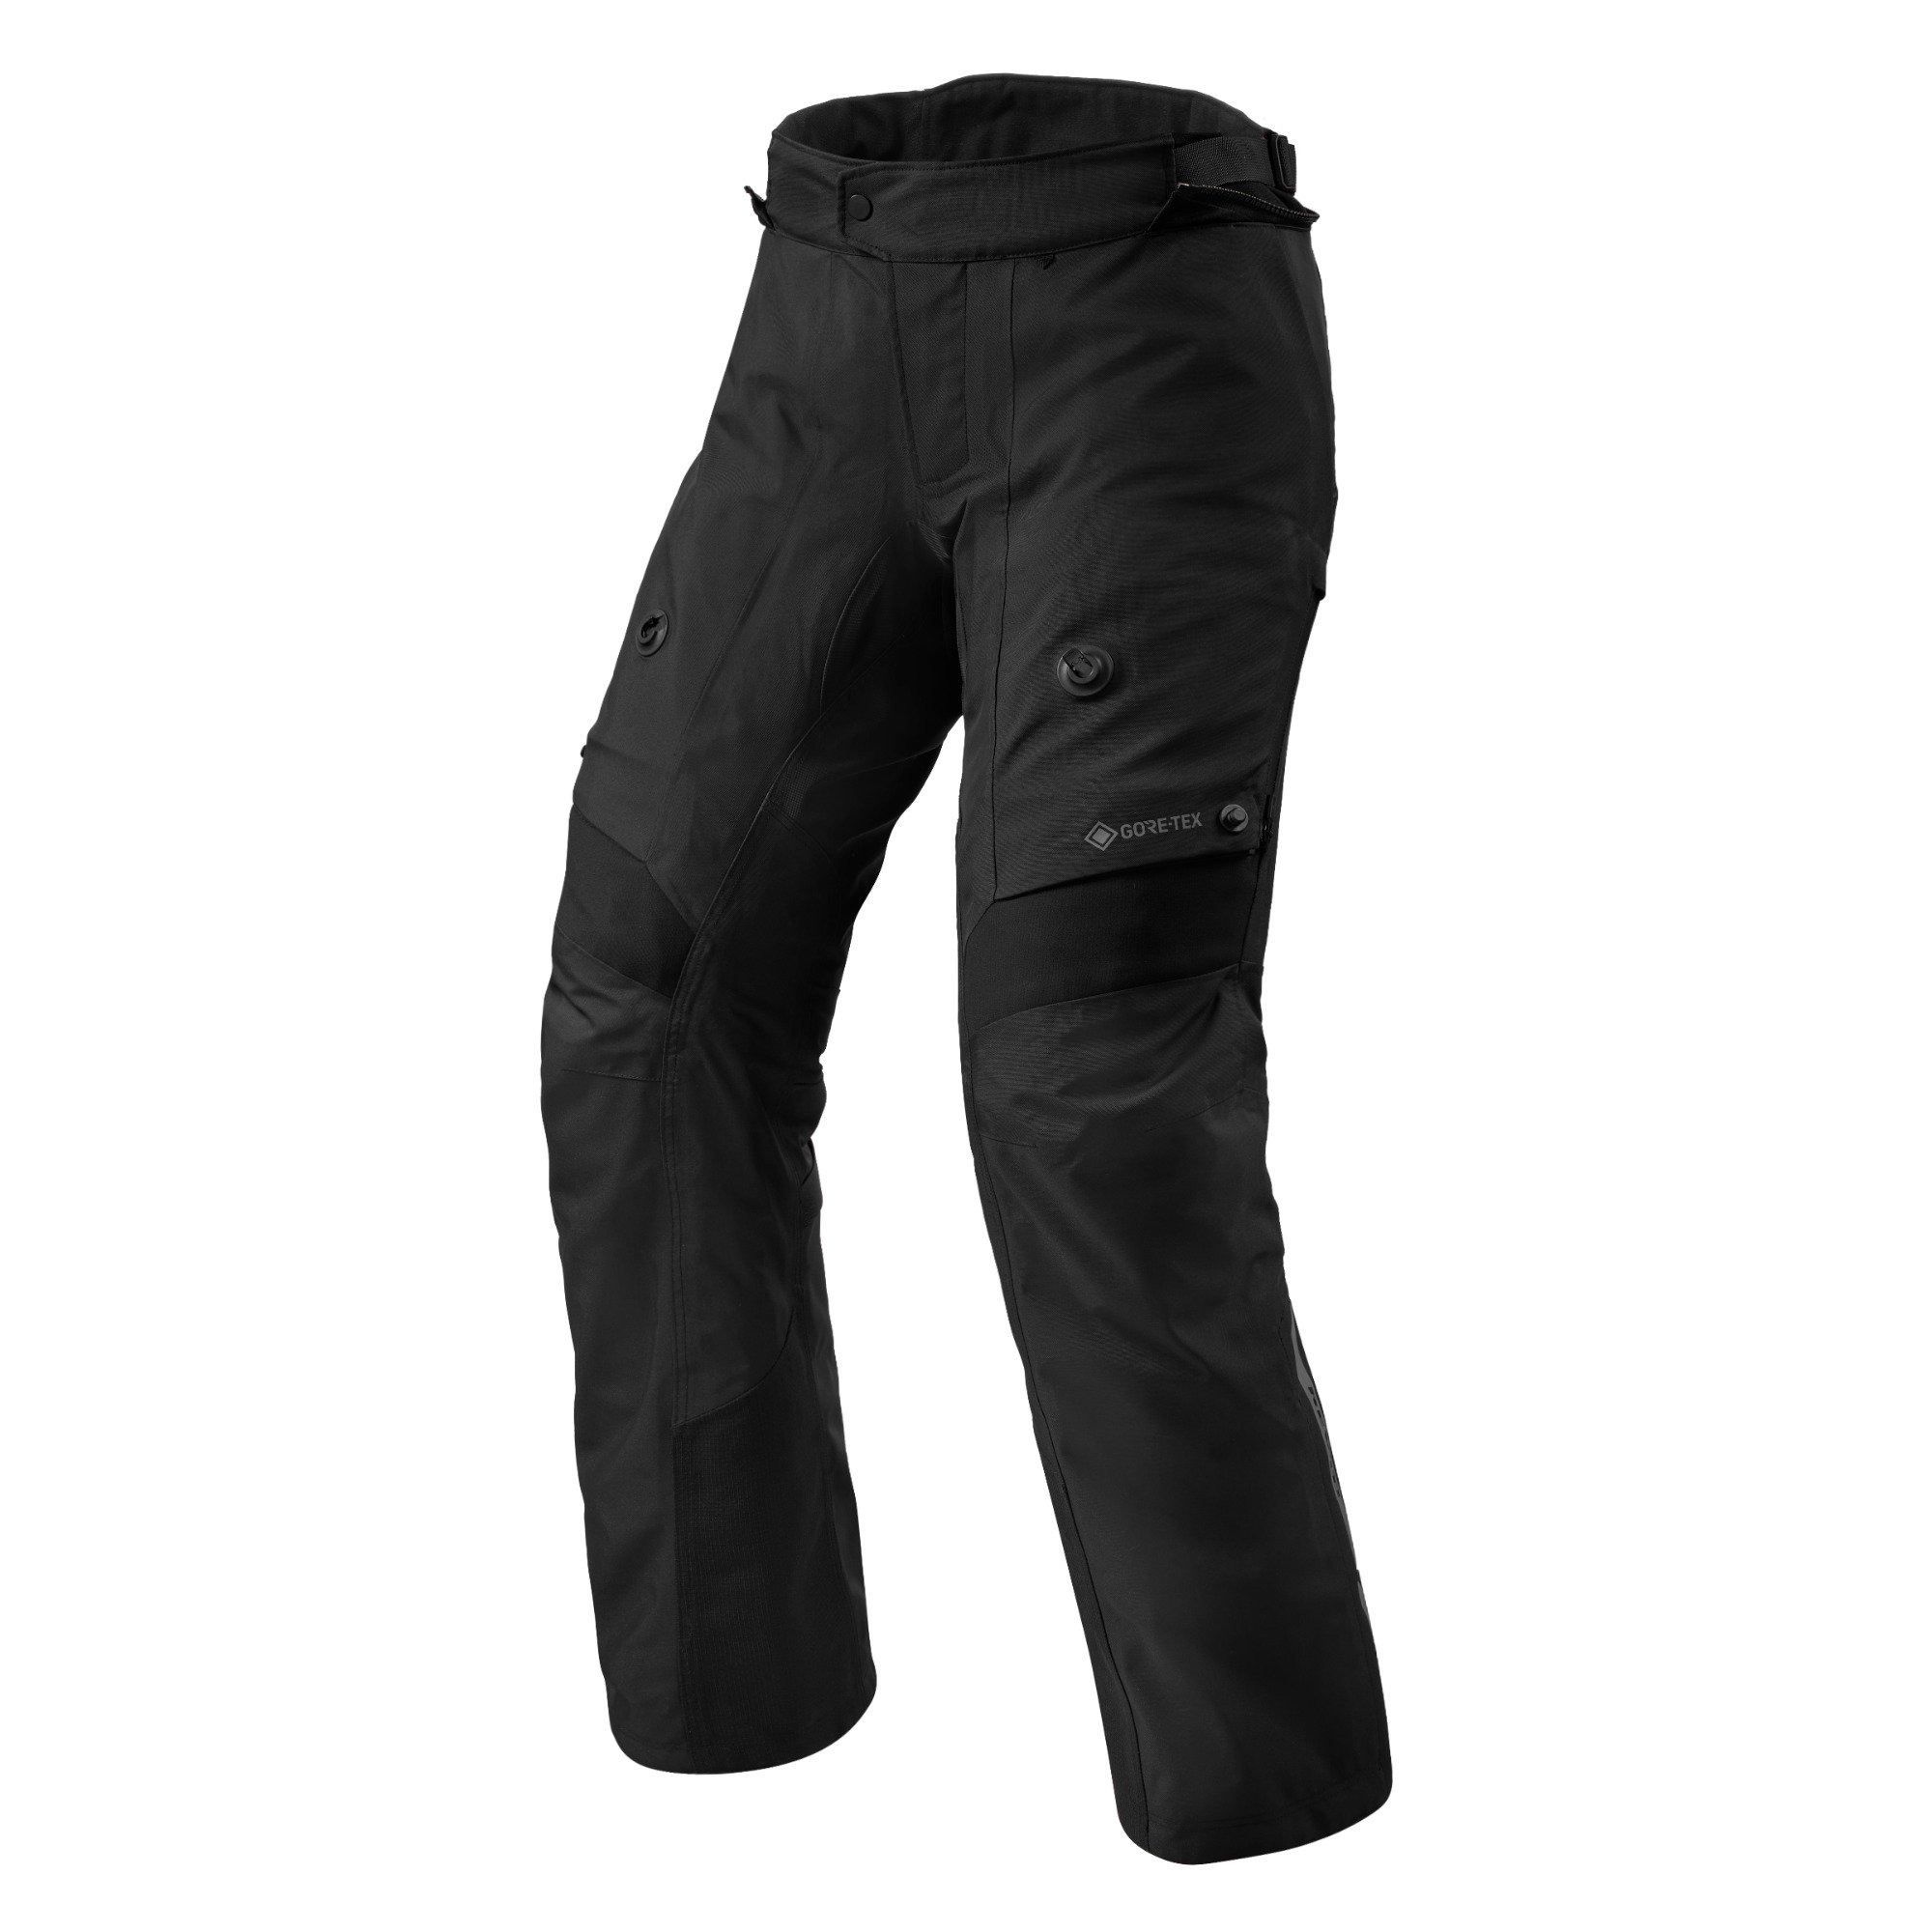 Image of REV'IT! Pants Poseidon 3 GTX Black Short Motorcycle Pants Size XL EN